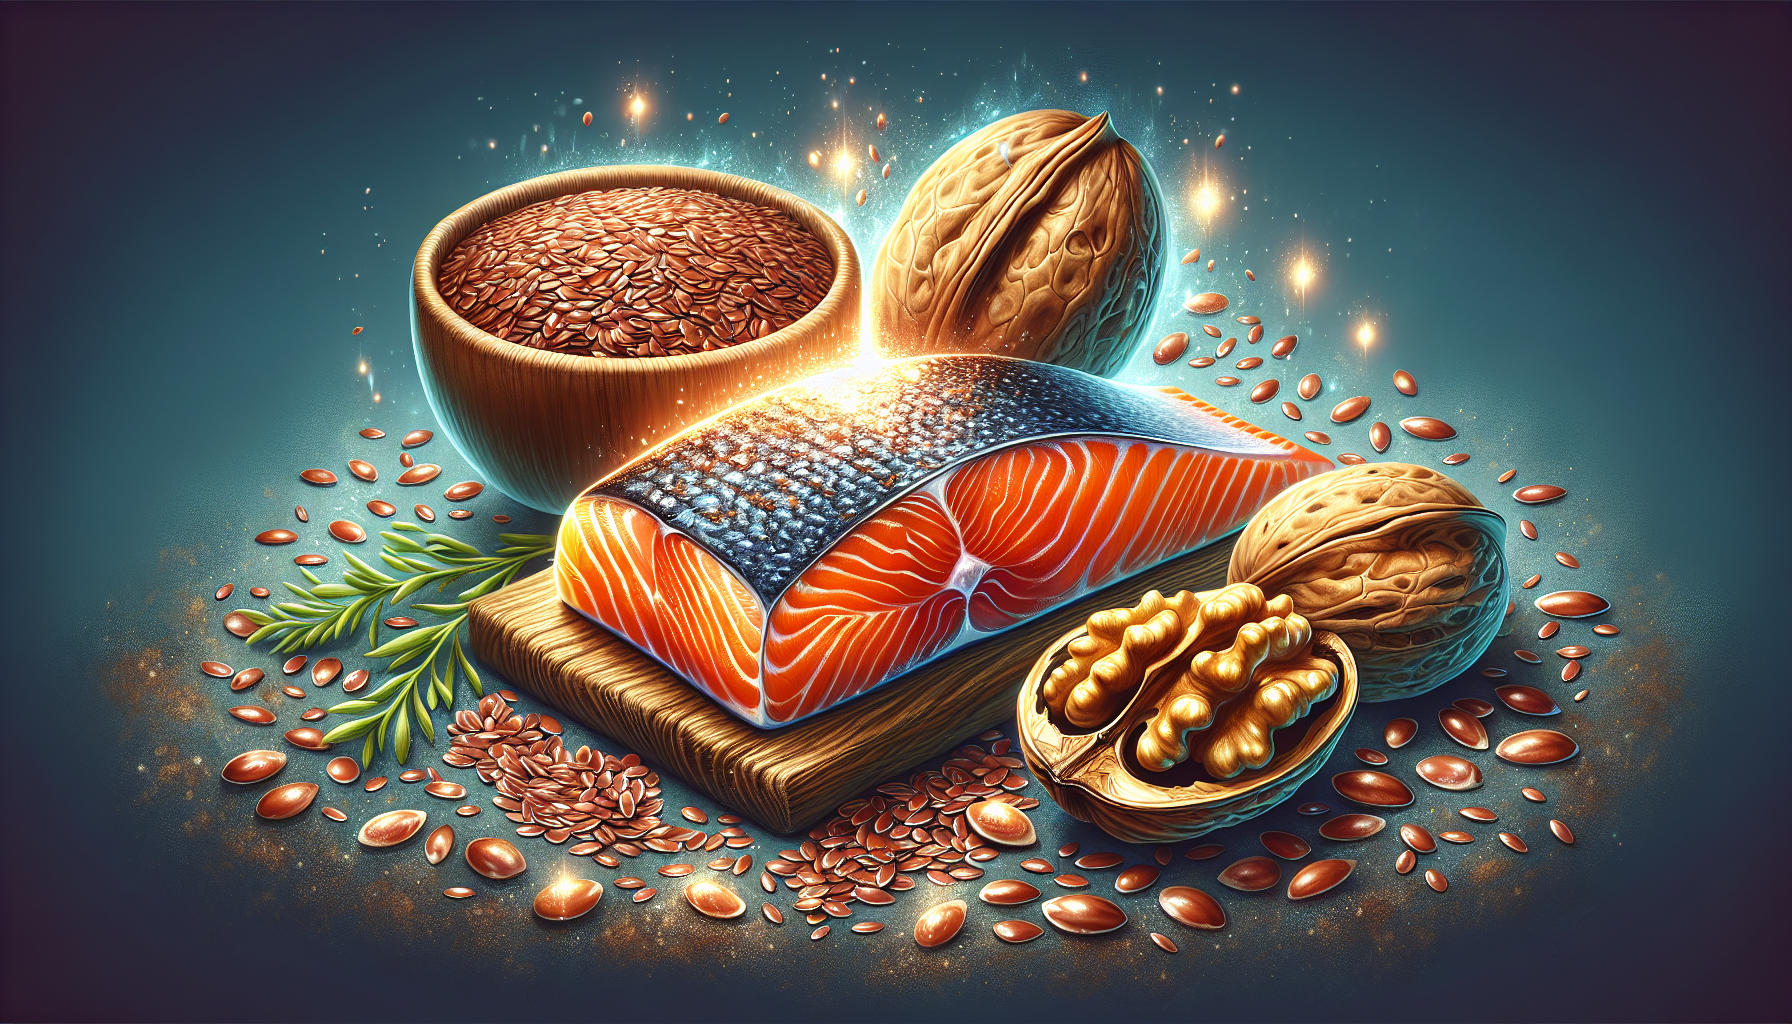 Illustration of omega-3 fatty acids rich foods